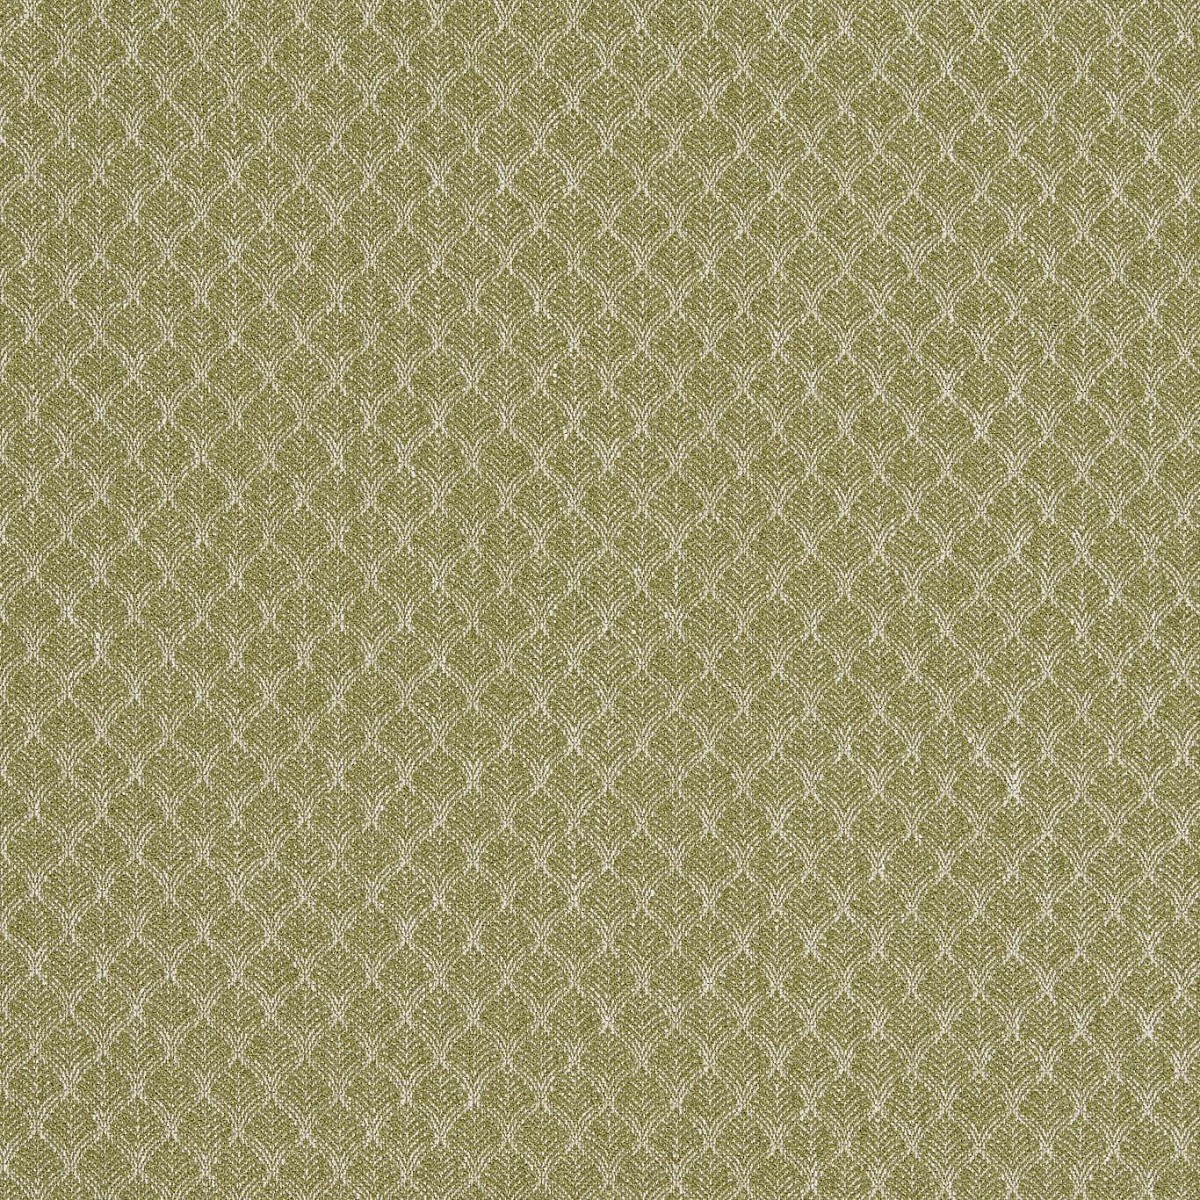 Trelica Olive Fabric by Clarke & Clarke